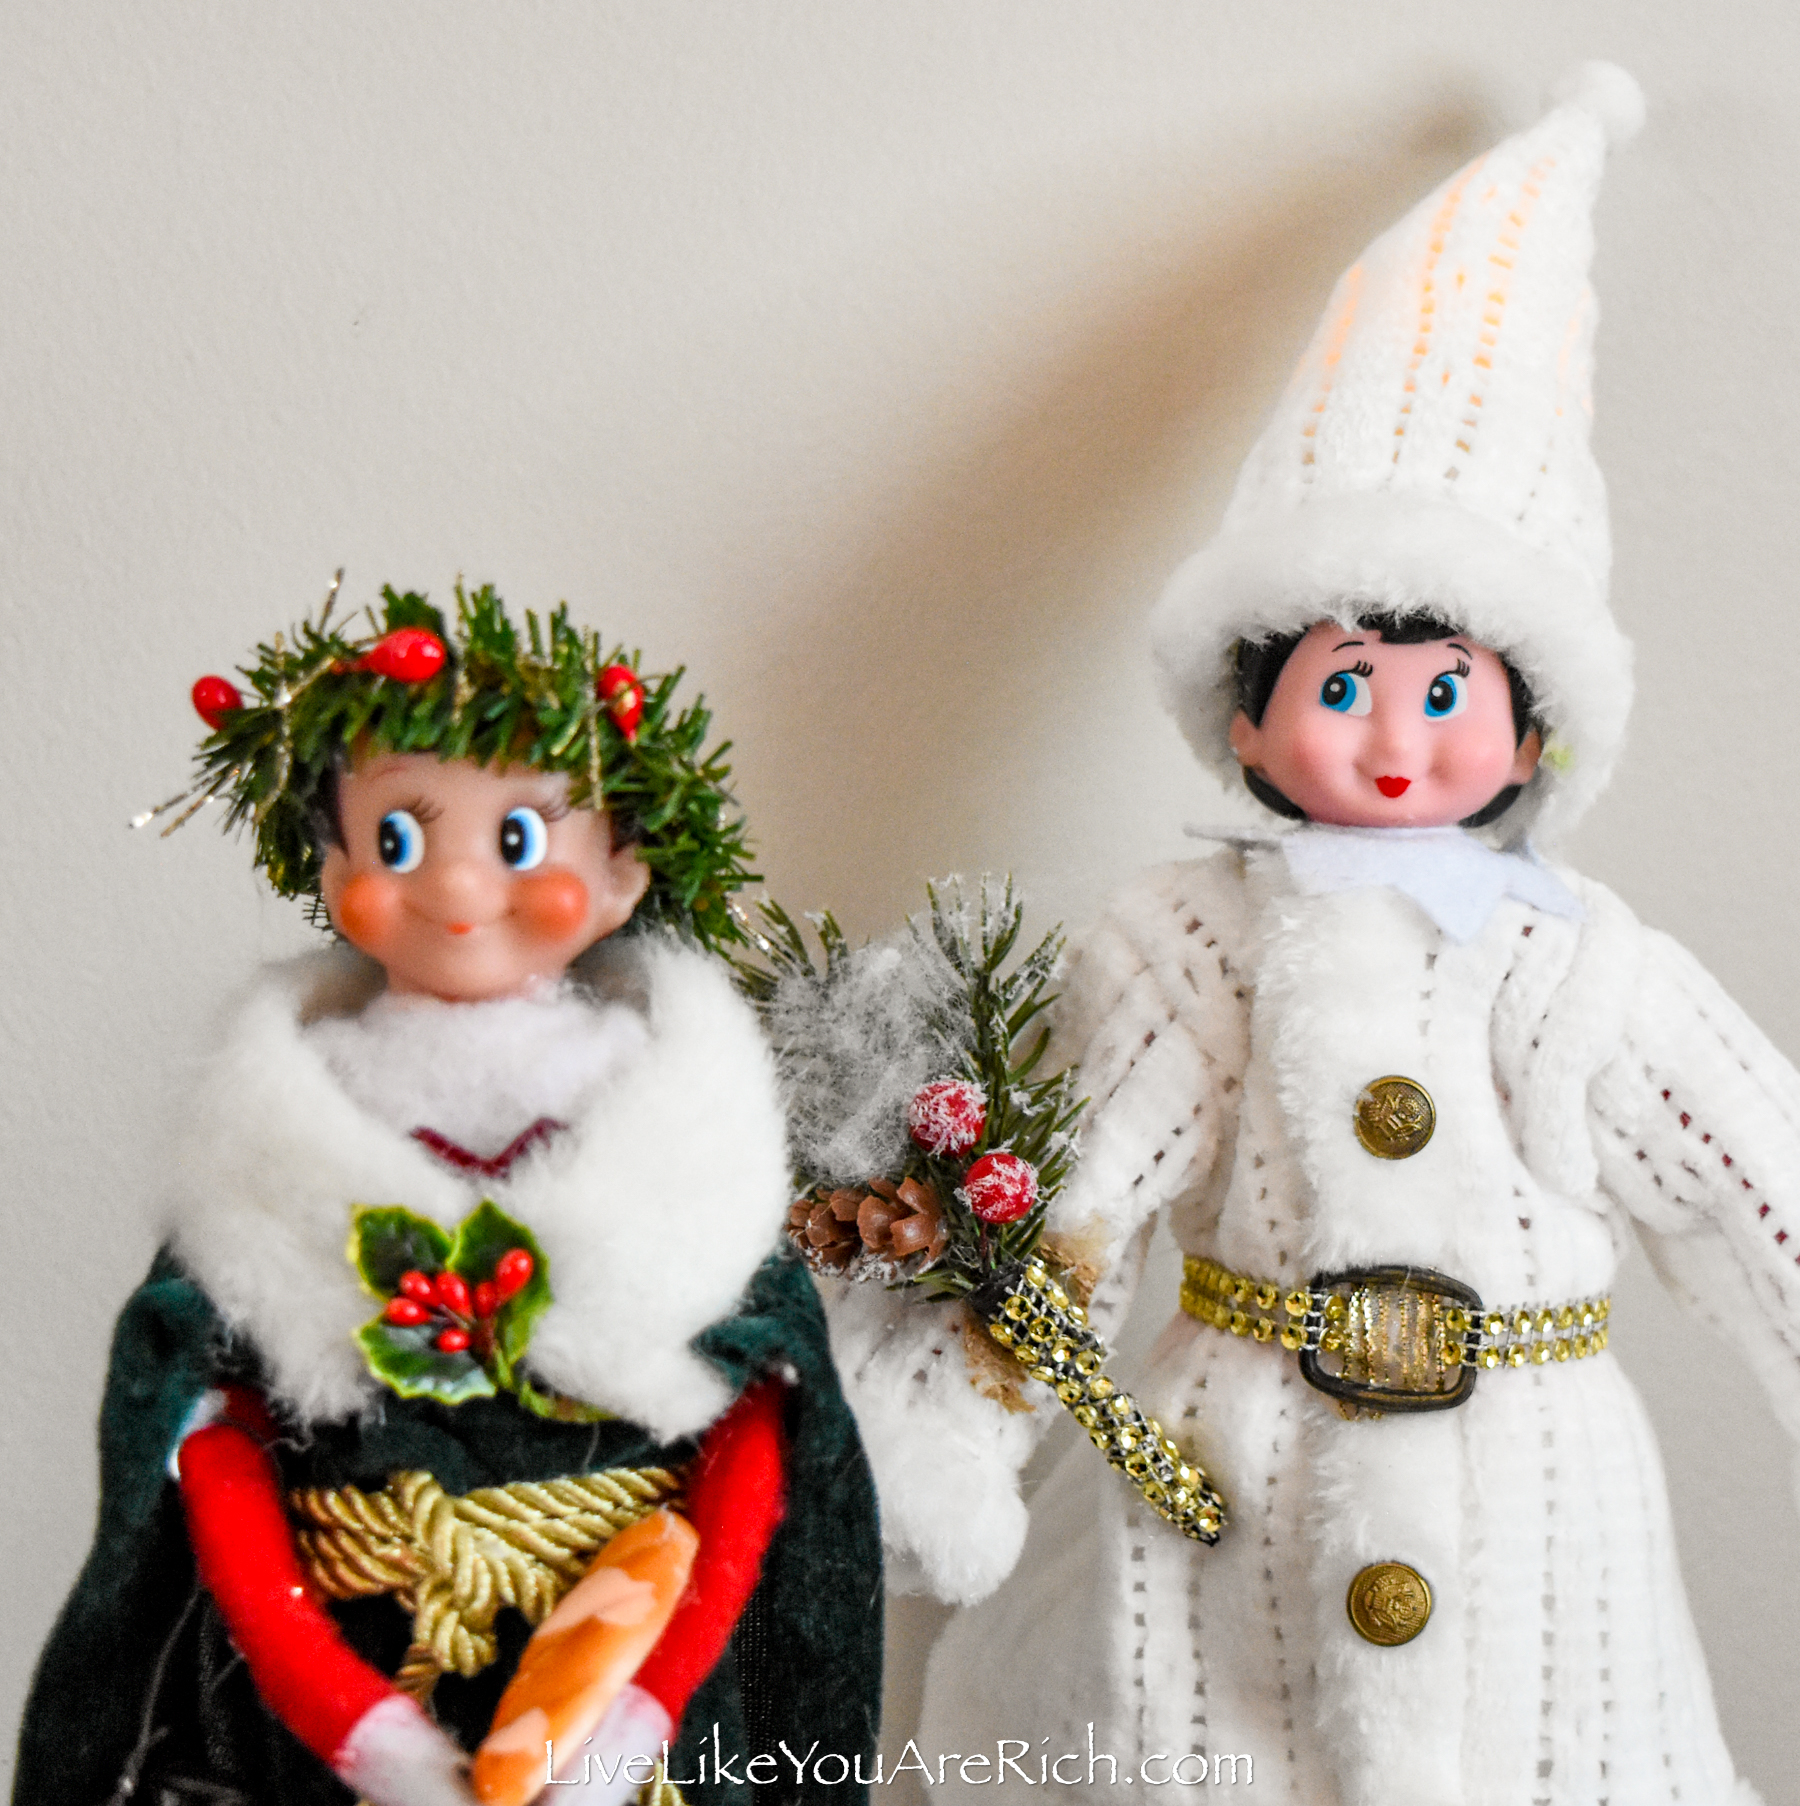 Elf on the Shelf: A Christmas Carol